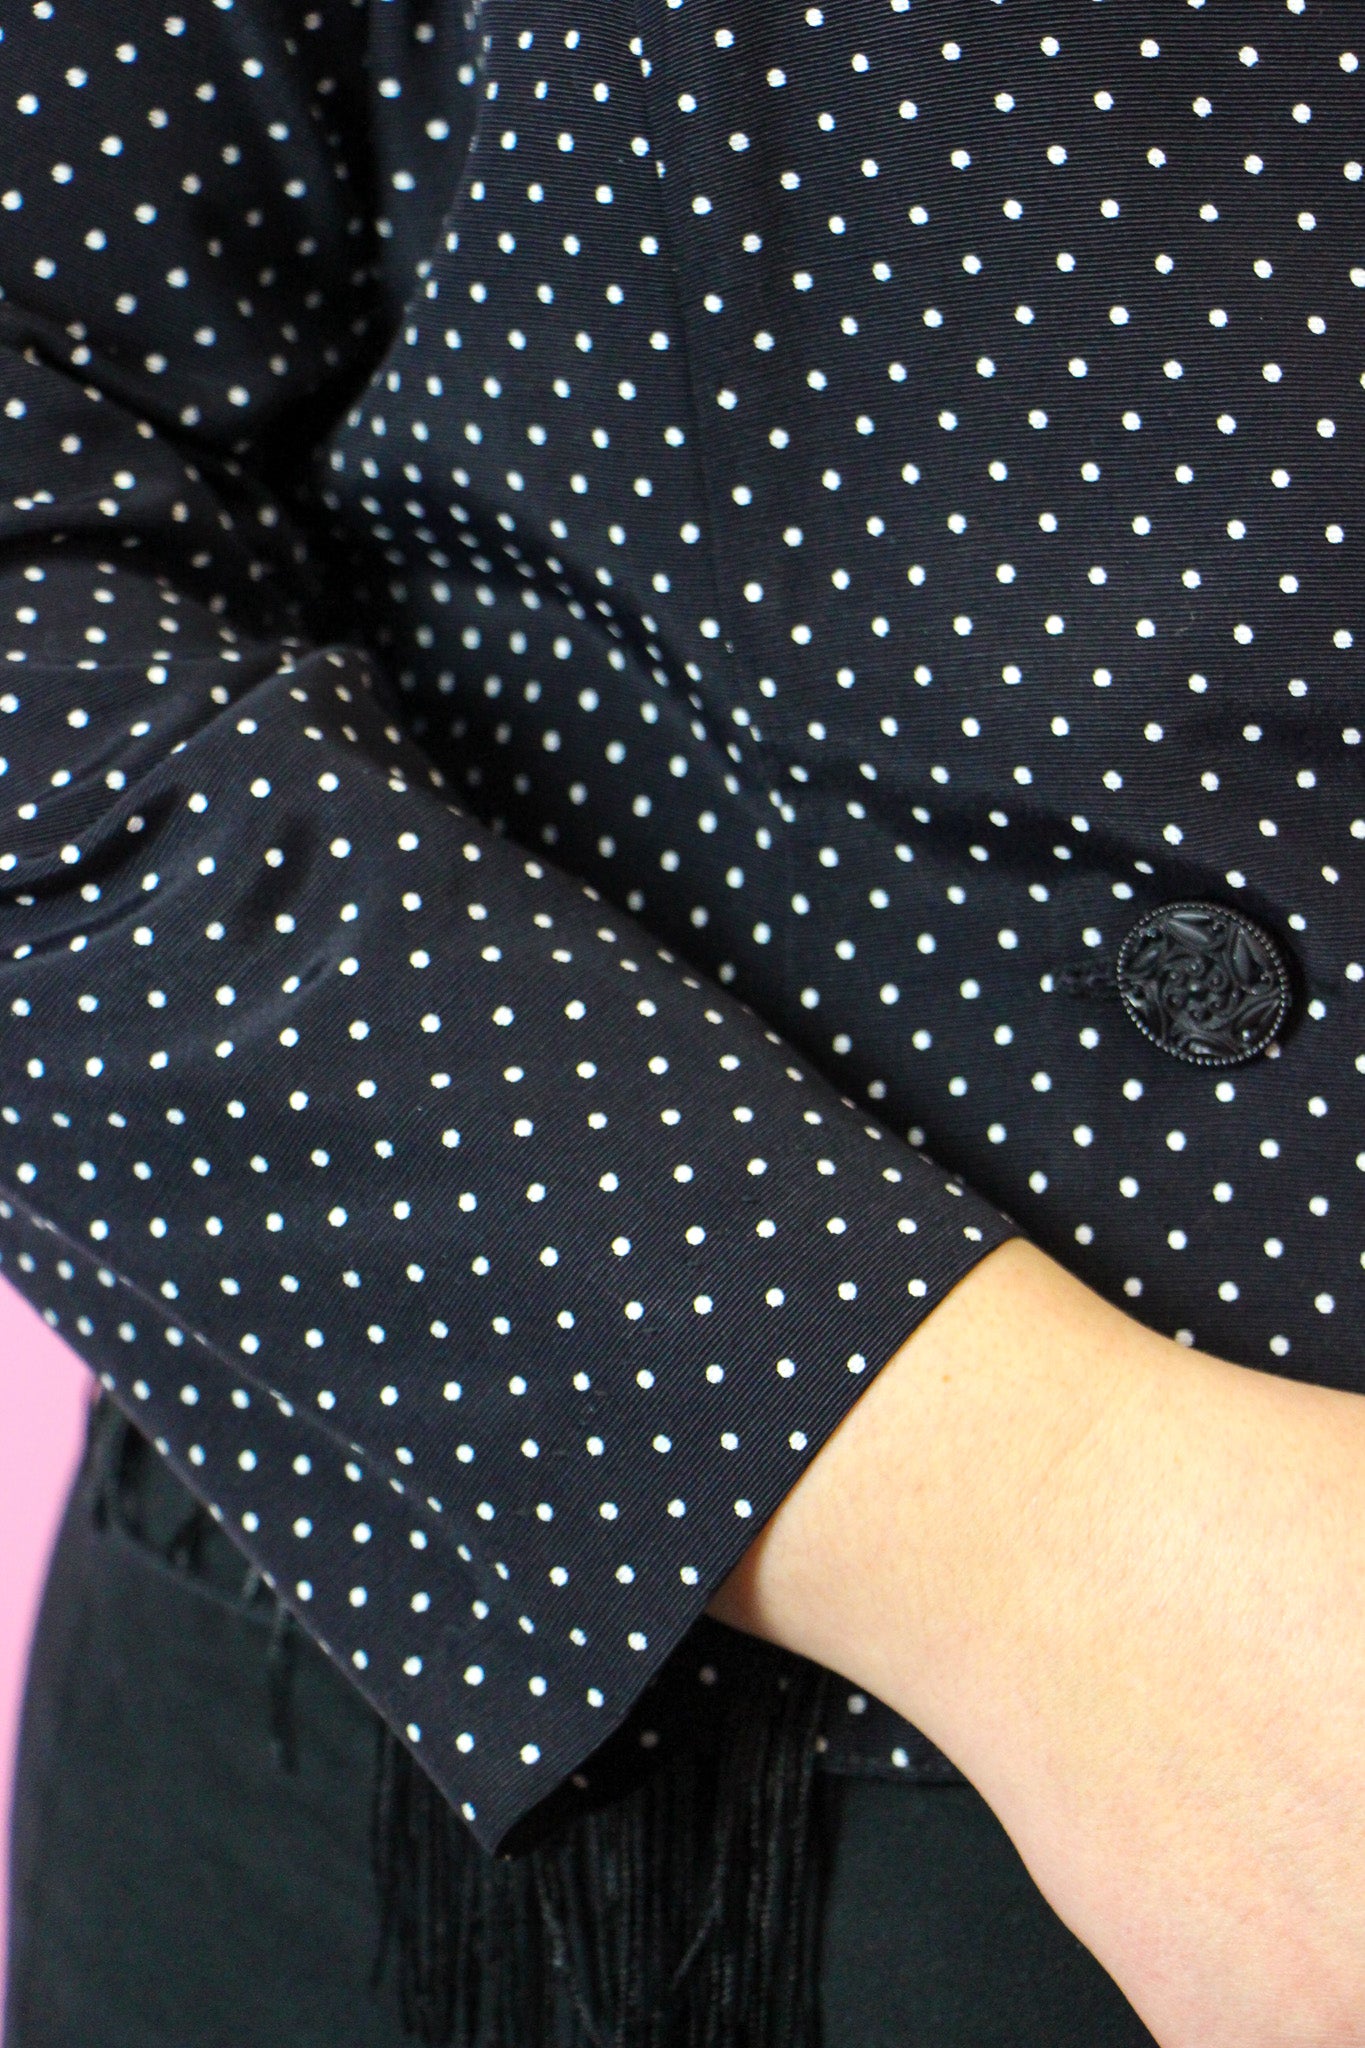 Polka Dot Top with Black Fringe - Size 18/XL